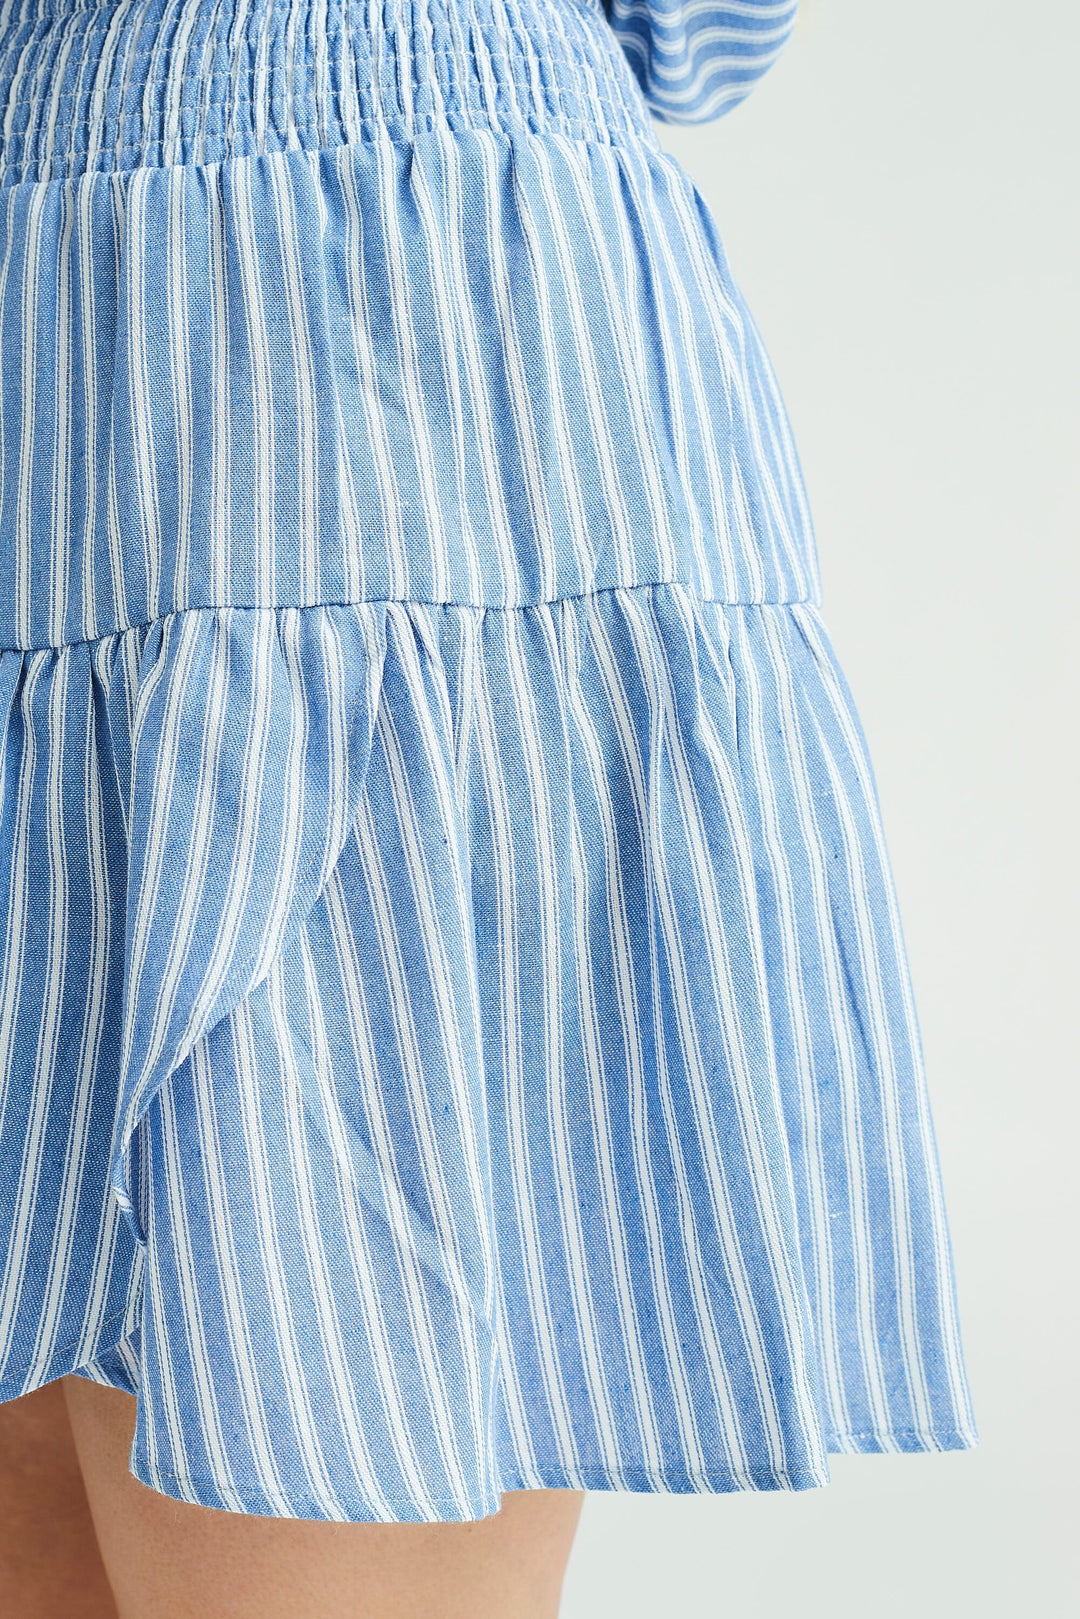 A-View - Safia Skirt - 112 Blue/White Stribe Nederdele 